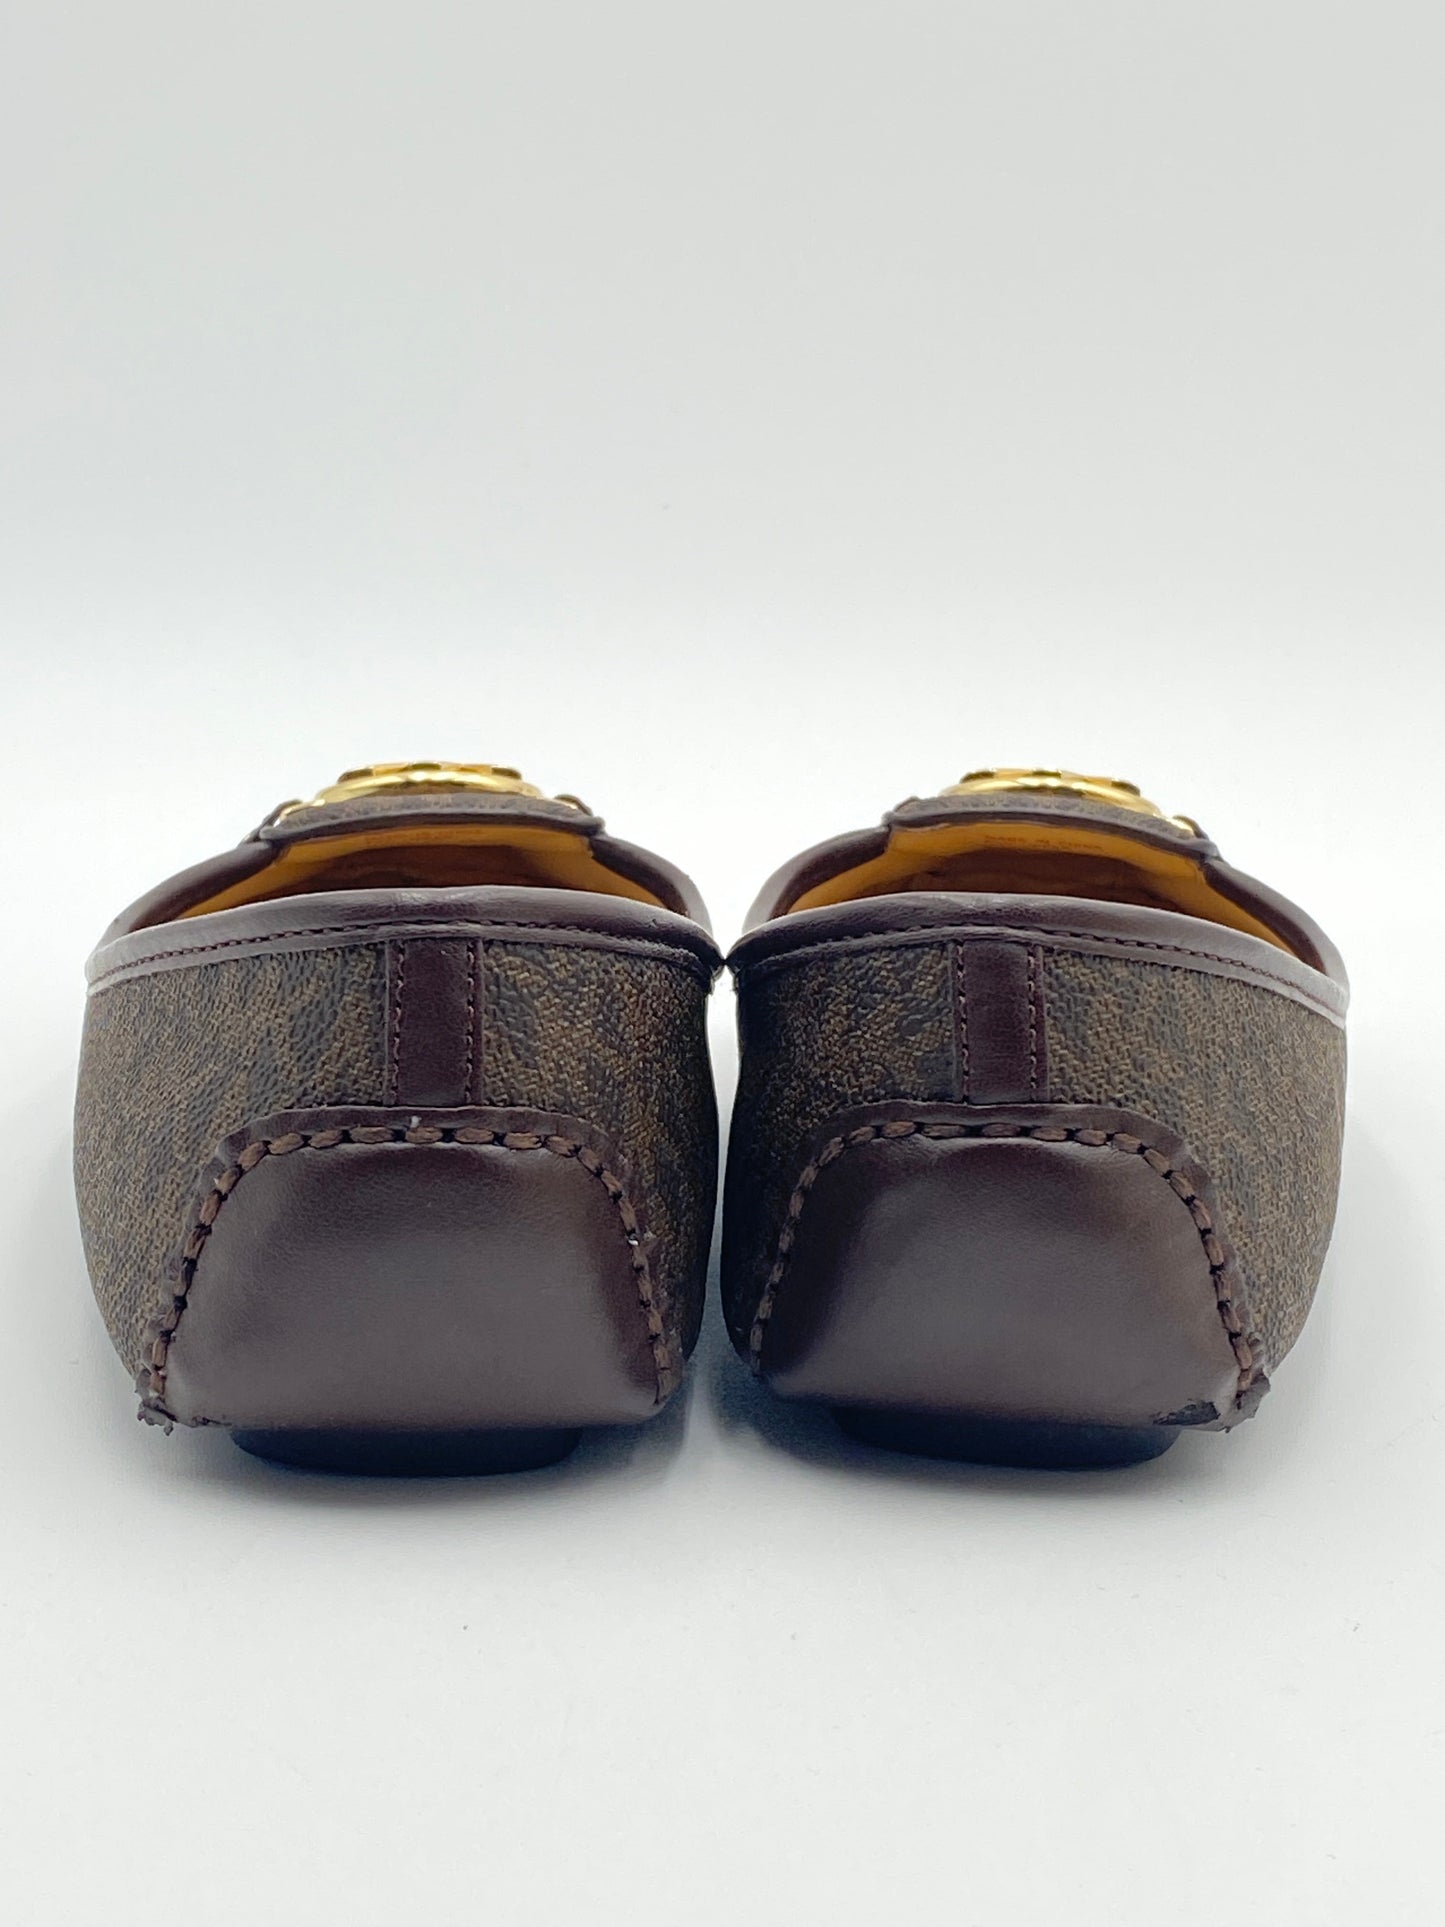 Brown Shoes Designer Michael By Michael Kors, Size 8.5